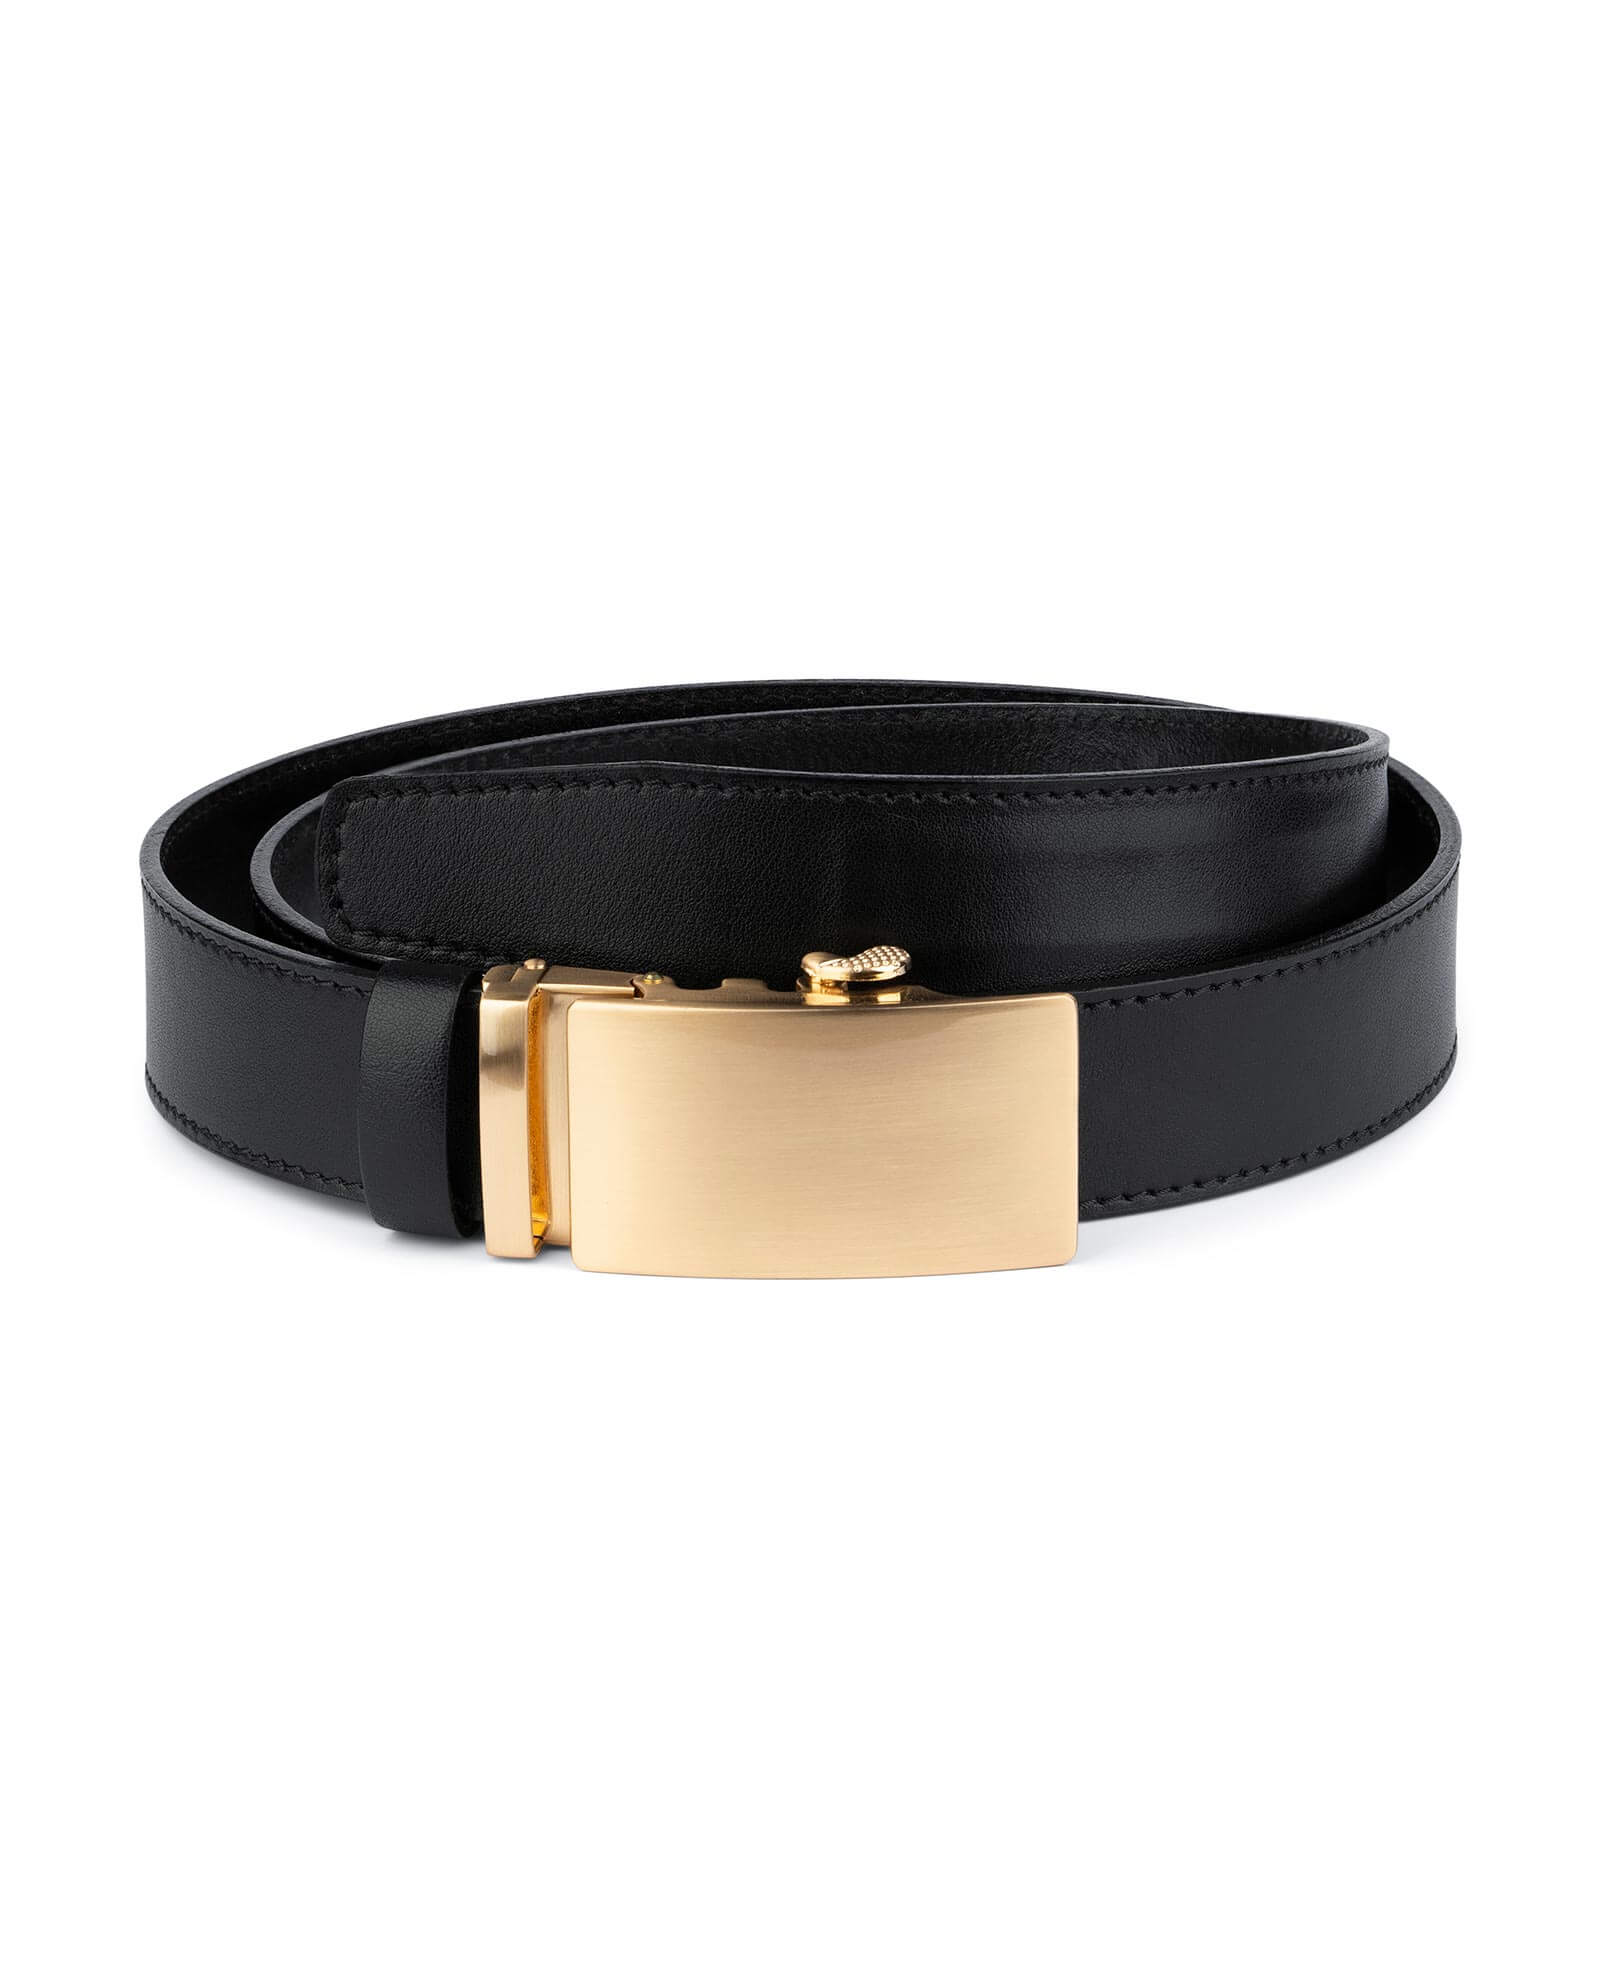 Buy Automatic Gold Buckle Black Belt | LeatherBeltsOnline.com